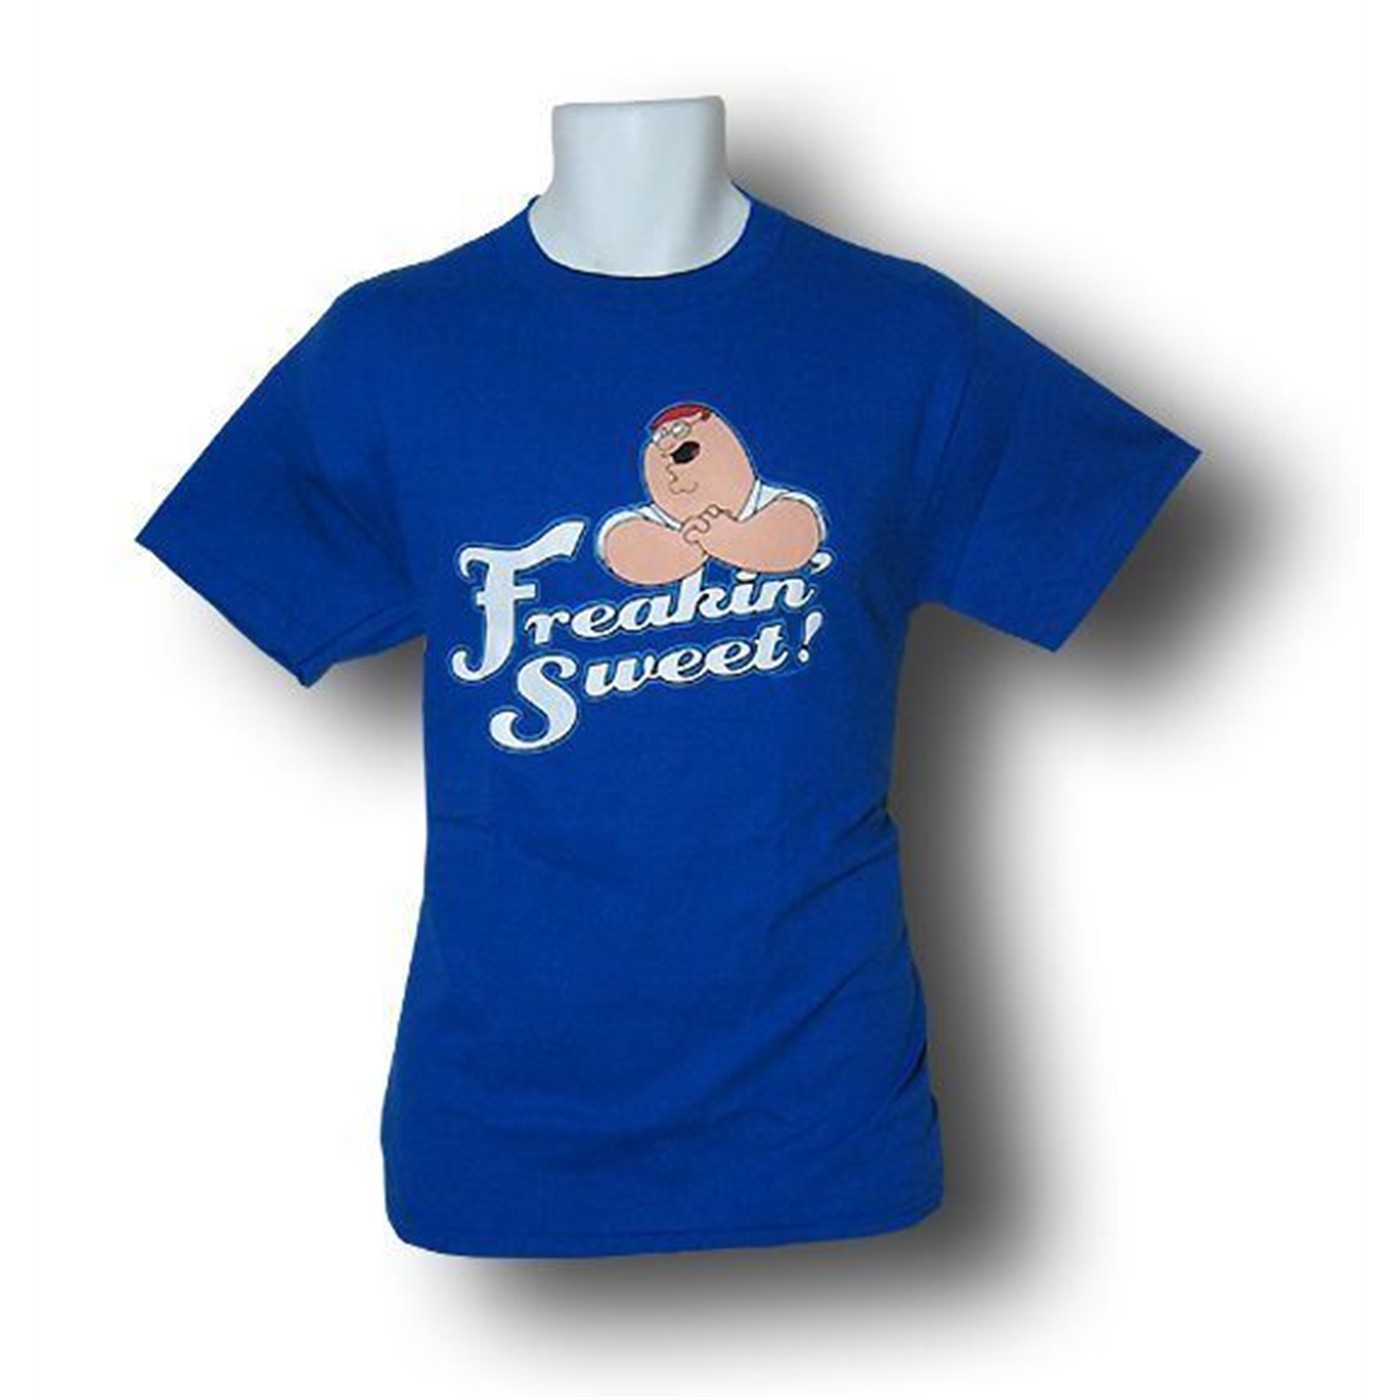 The Family Guy Peter Freakin' Sweet T-Shirt